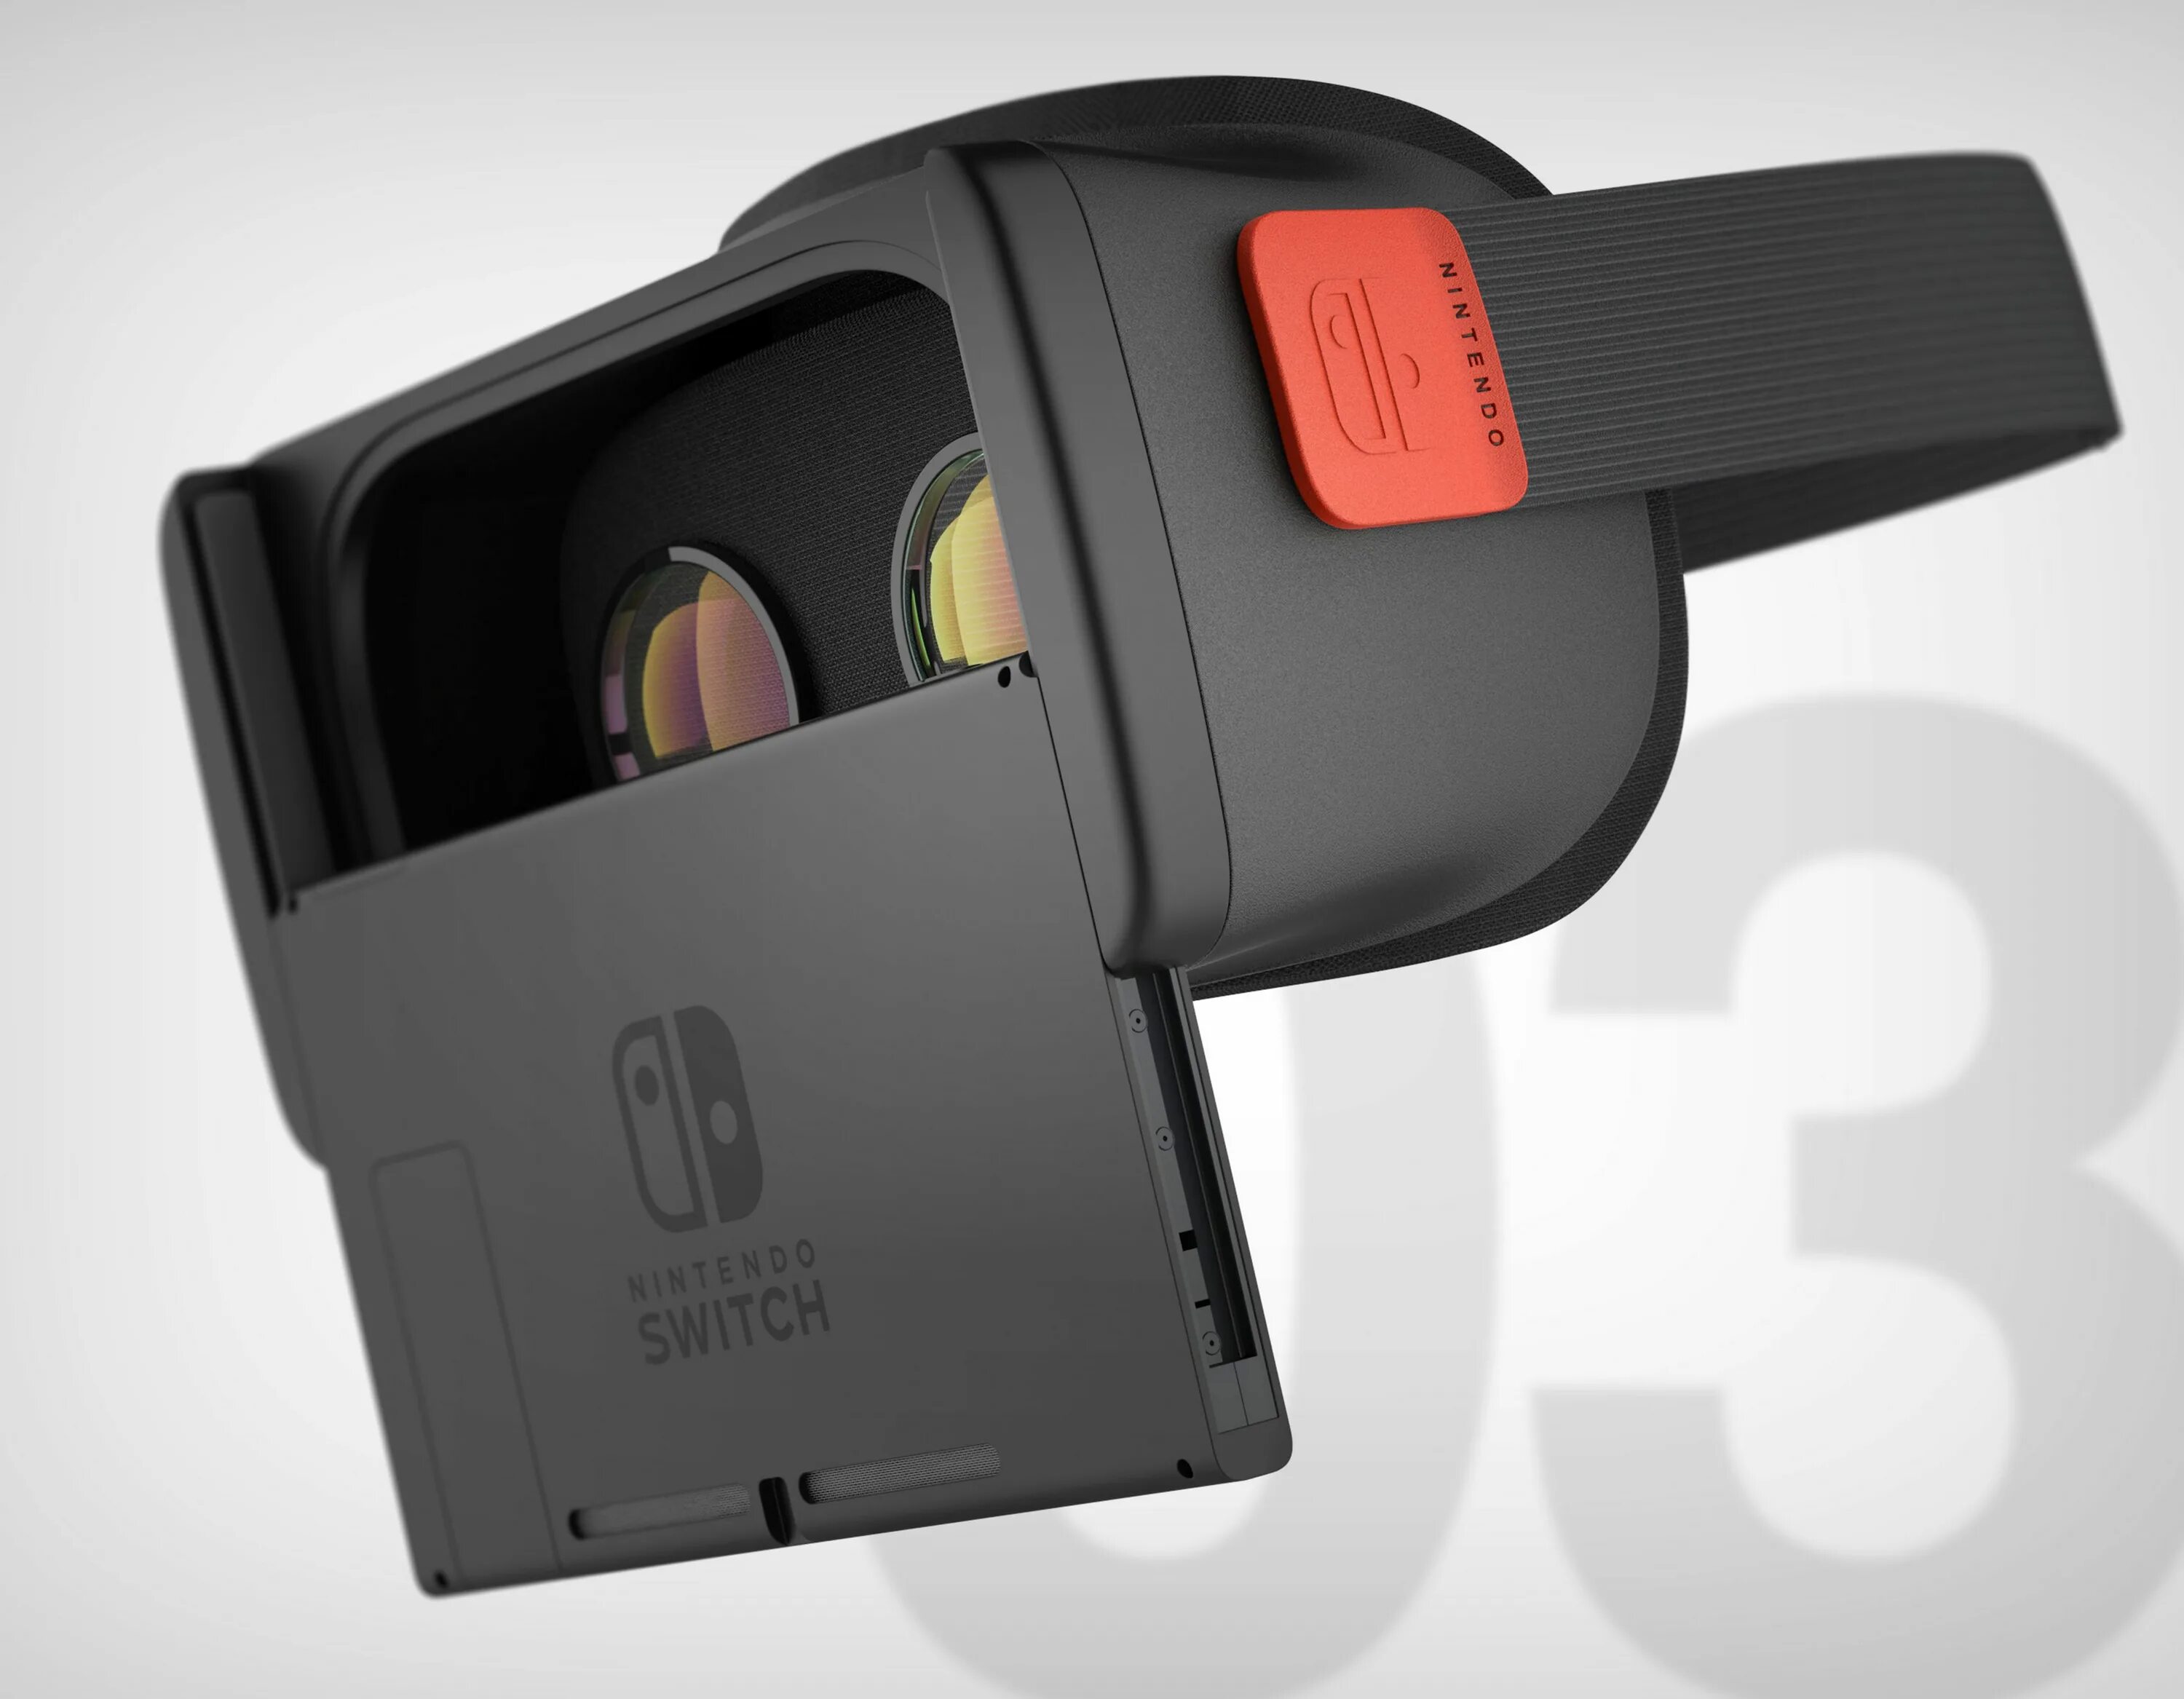 Свитч аксессуары. VR для Нинтендо свитч. Nintendo Switch VR шлем. VR Nintendo Switch игры. VR очки для Нинтендо свитч.